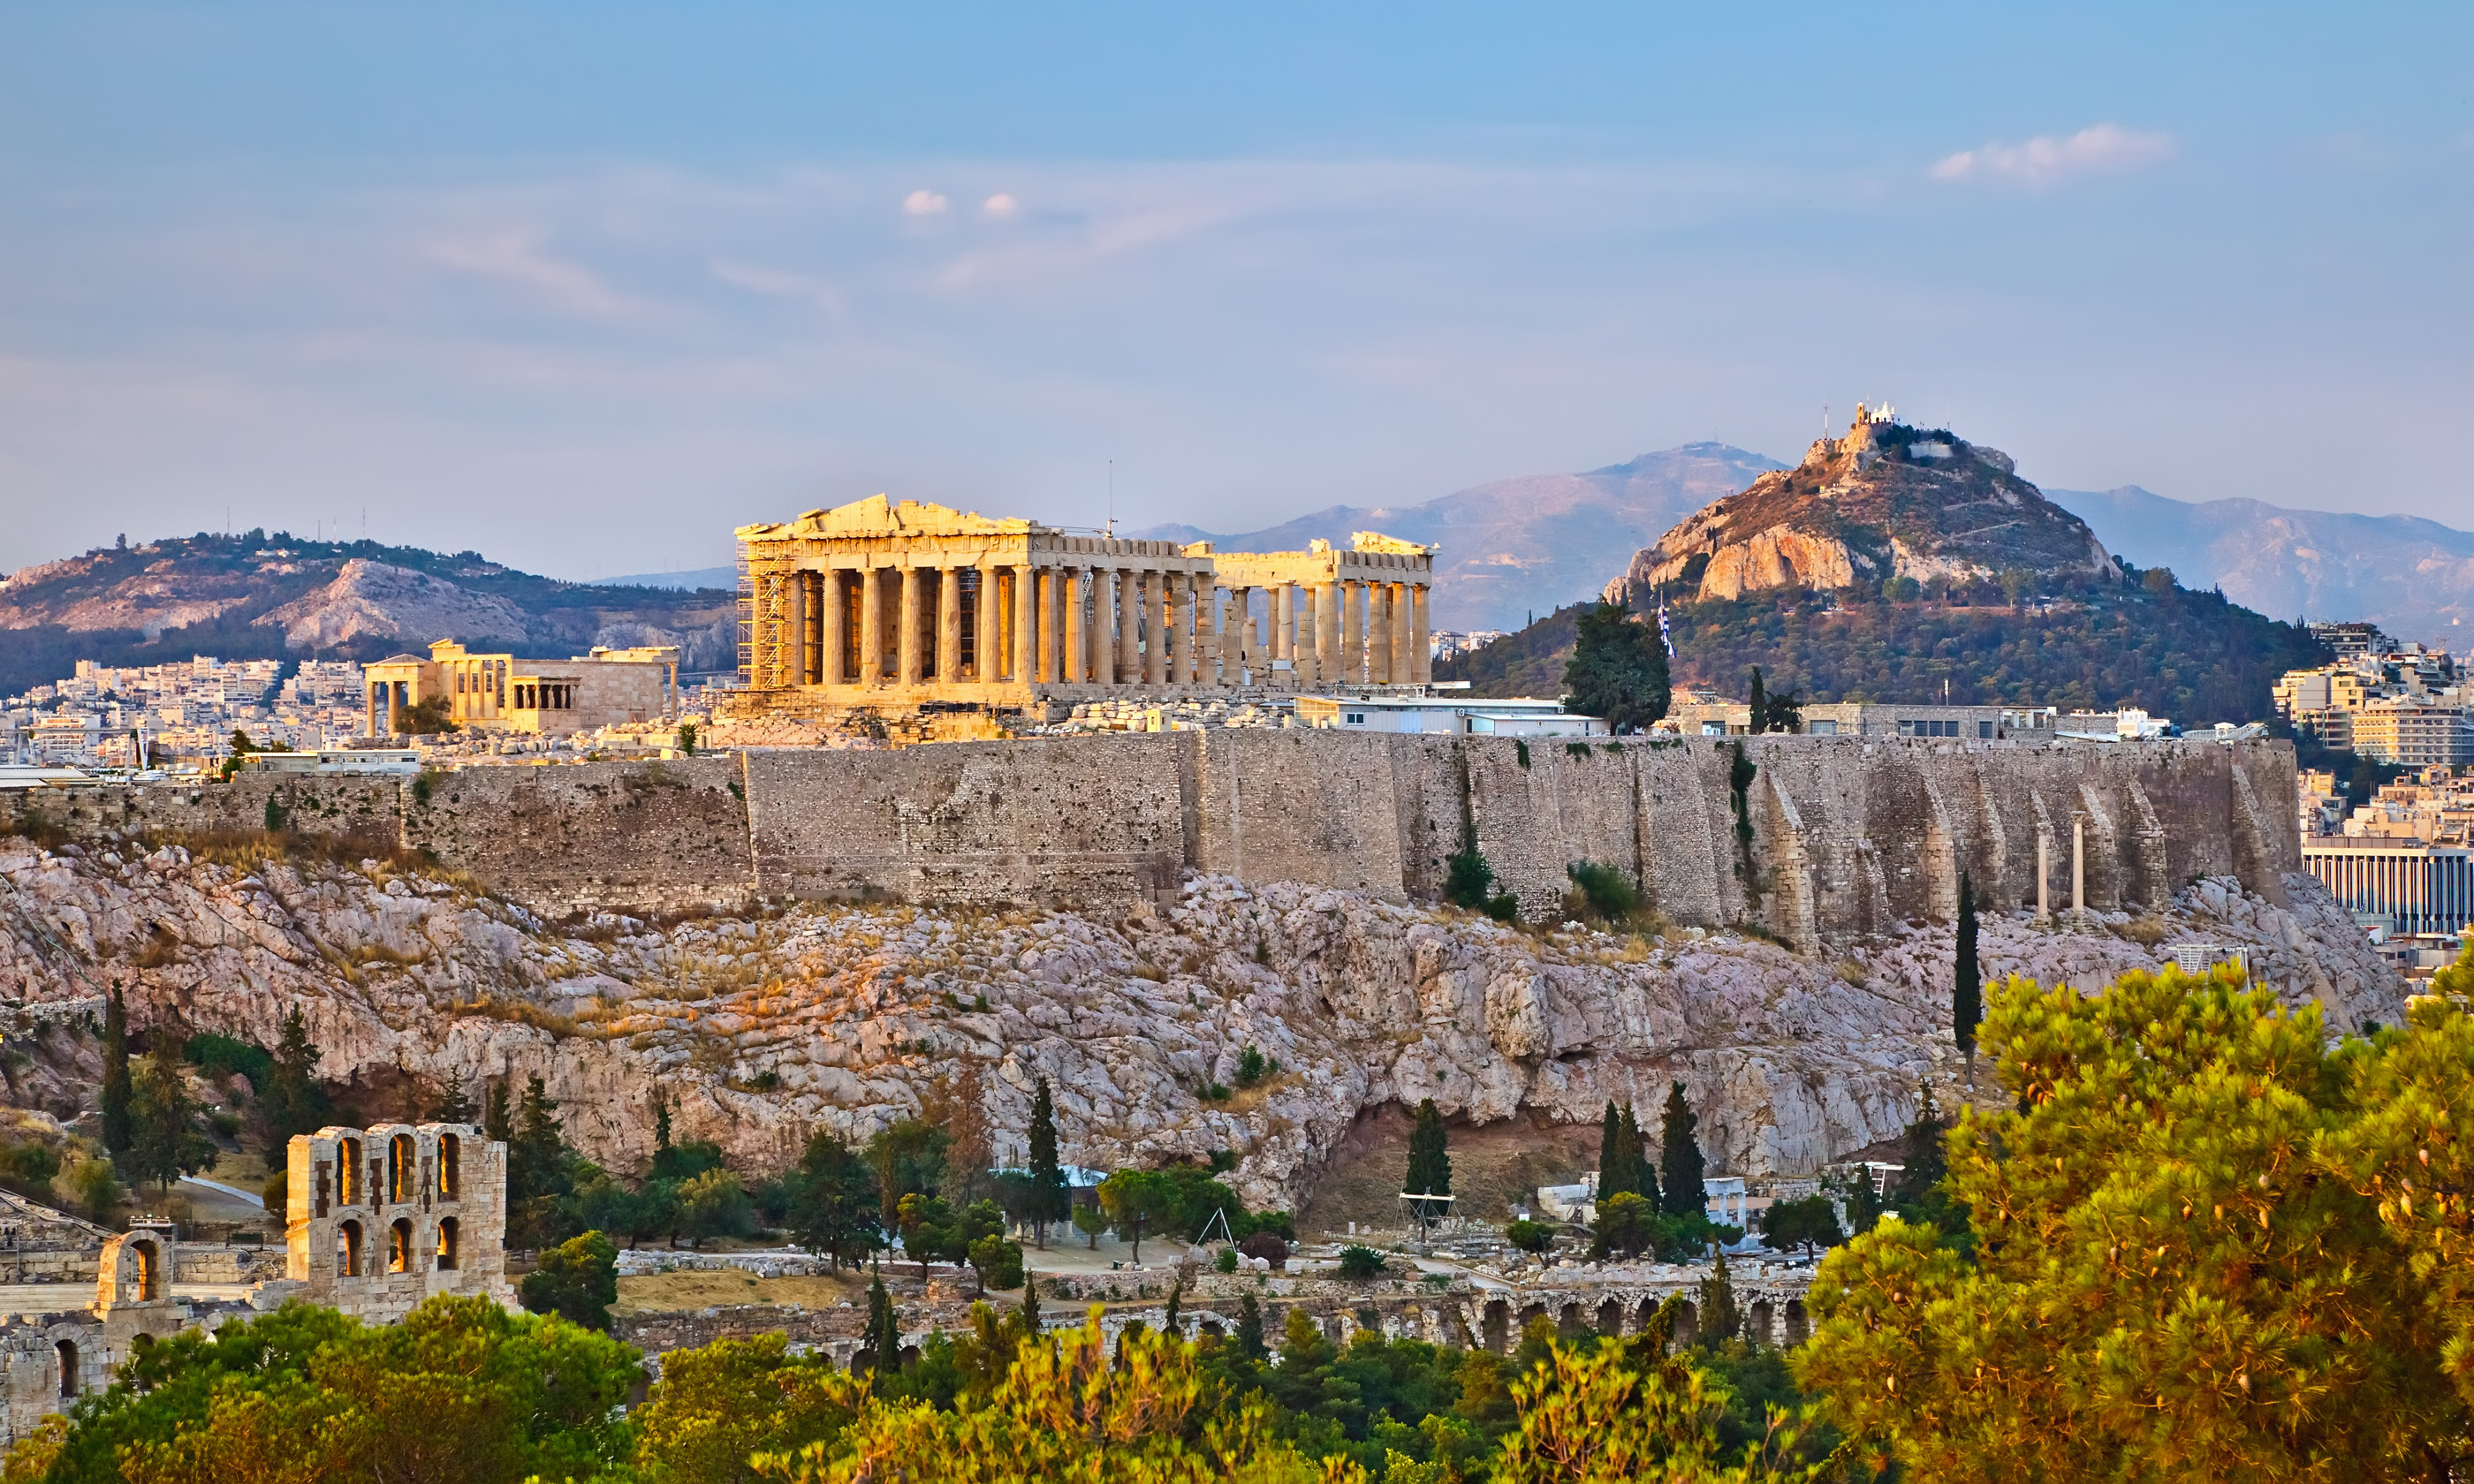 Acropolis at sunset (Shutterstock.com)